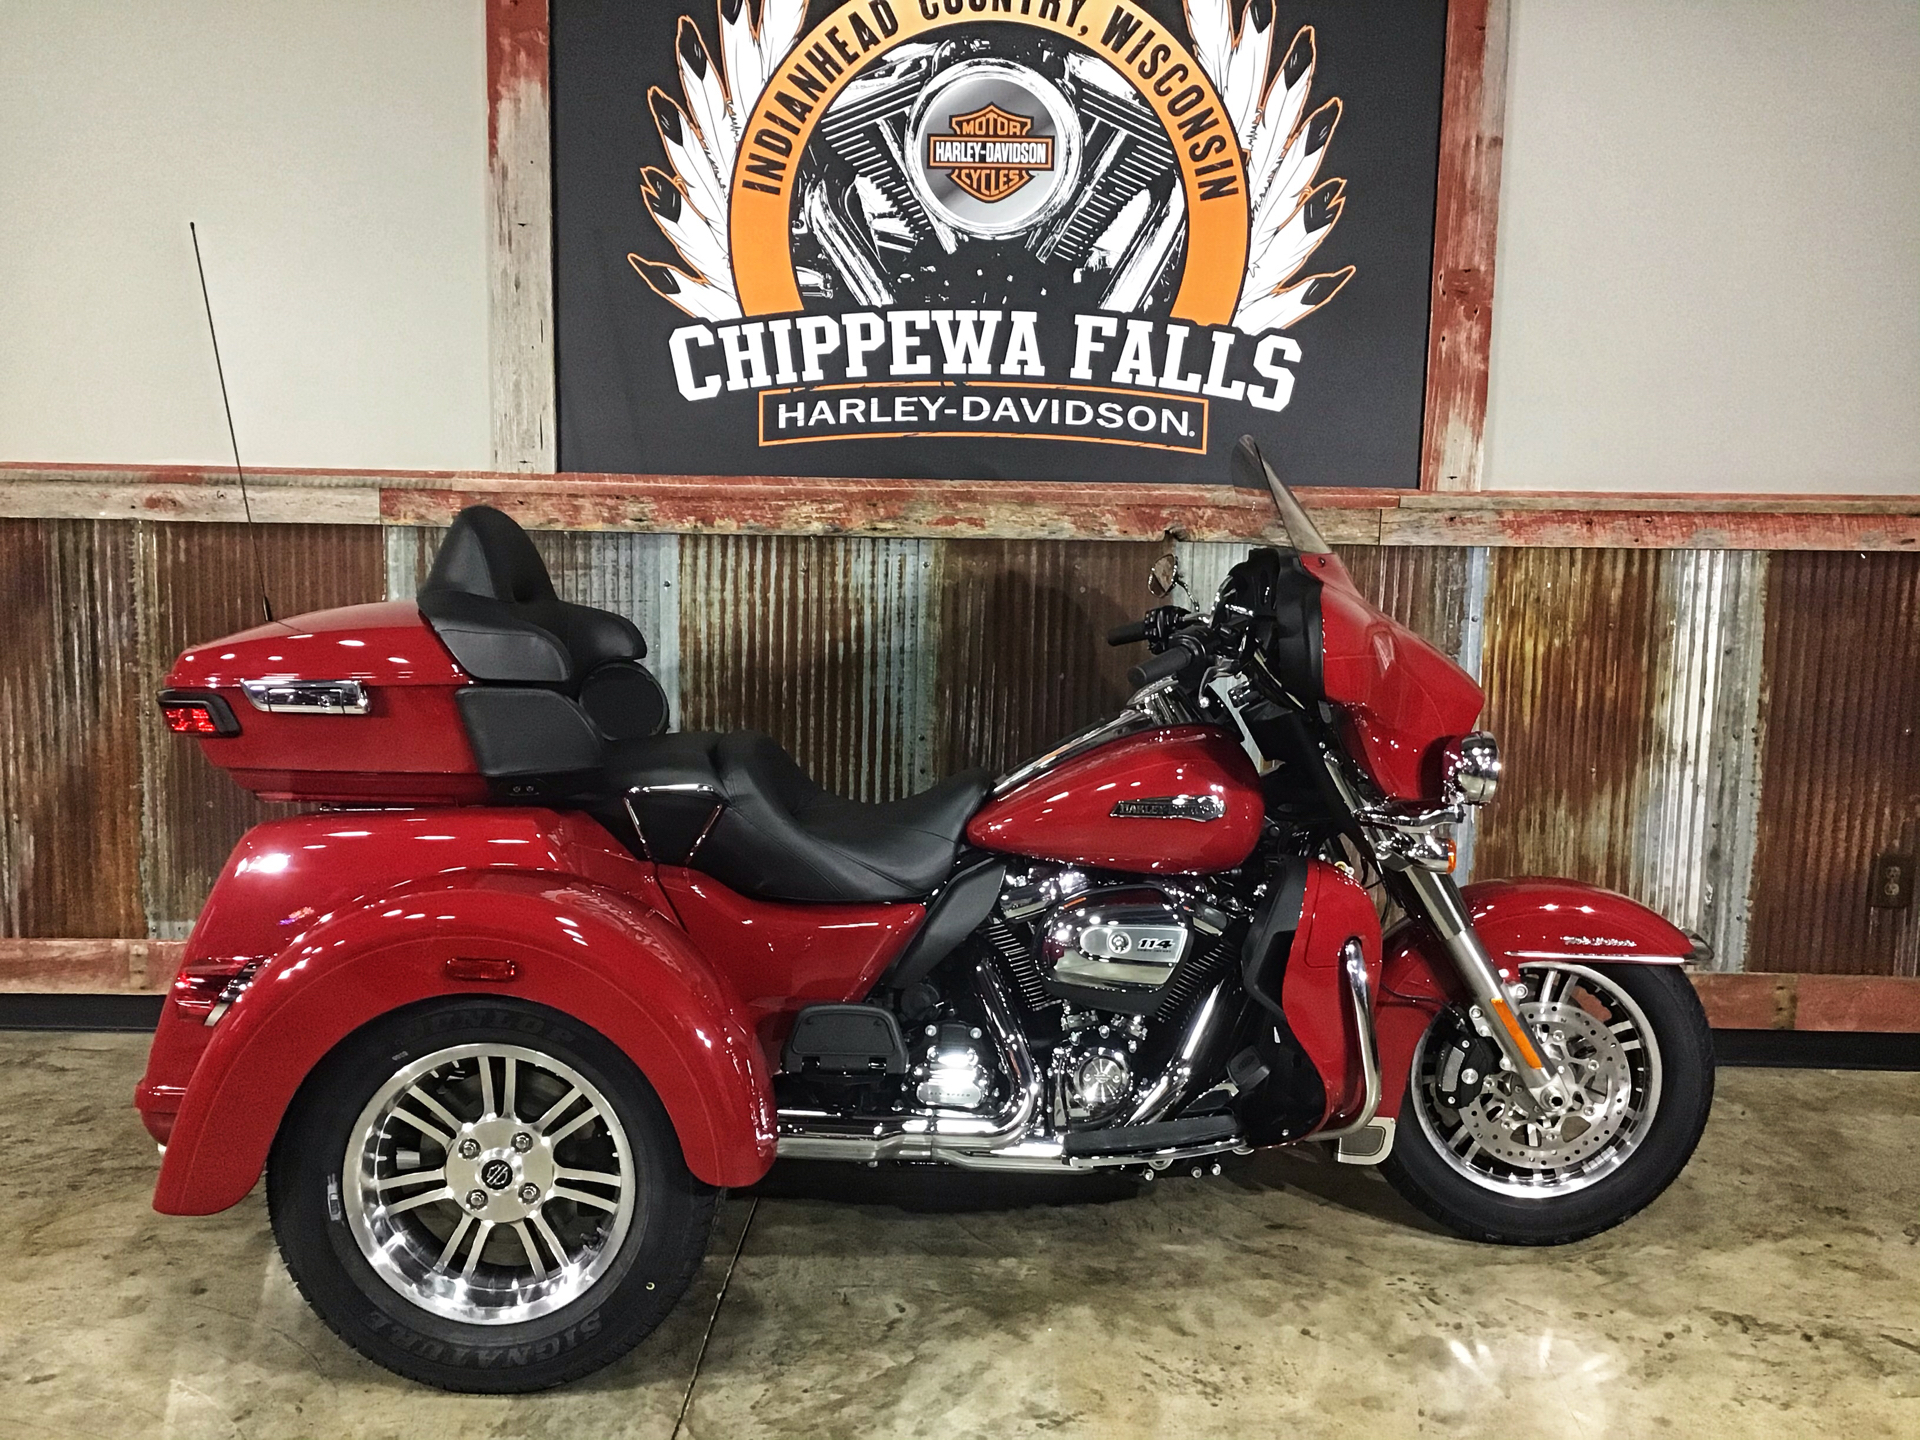 New 2021 Harley Davidson Tri Glide Ultra Billiard Red Motorcycles In Chippewa Falls Wi Tk850516